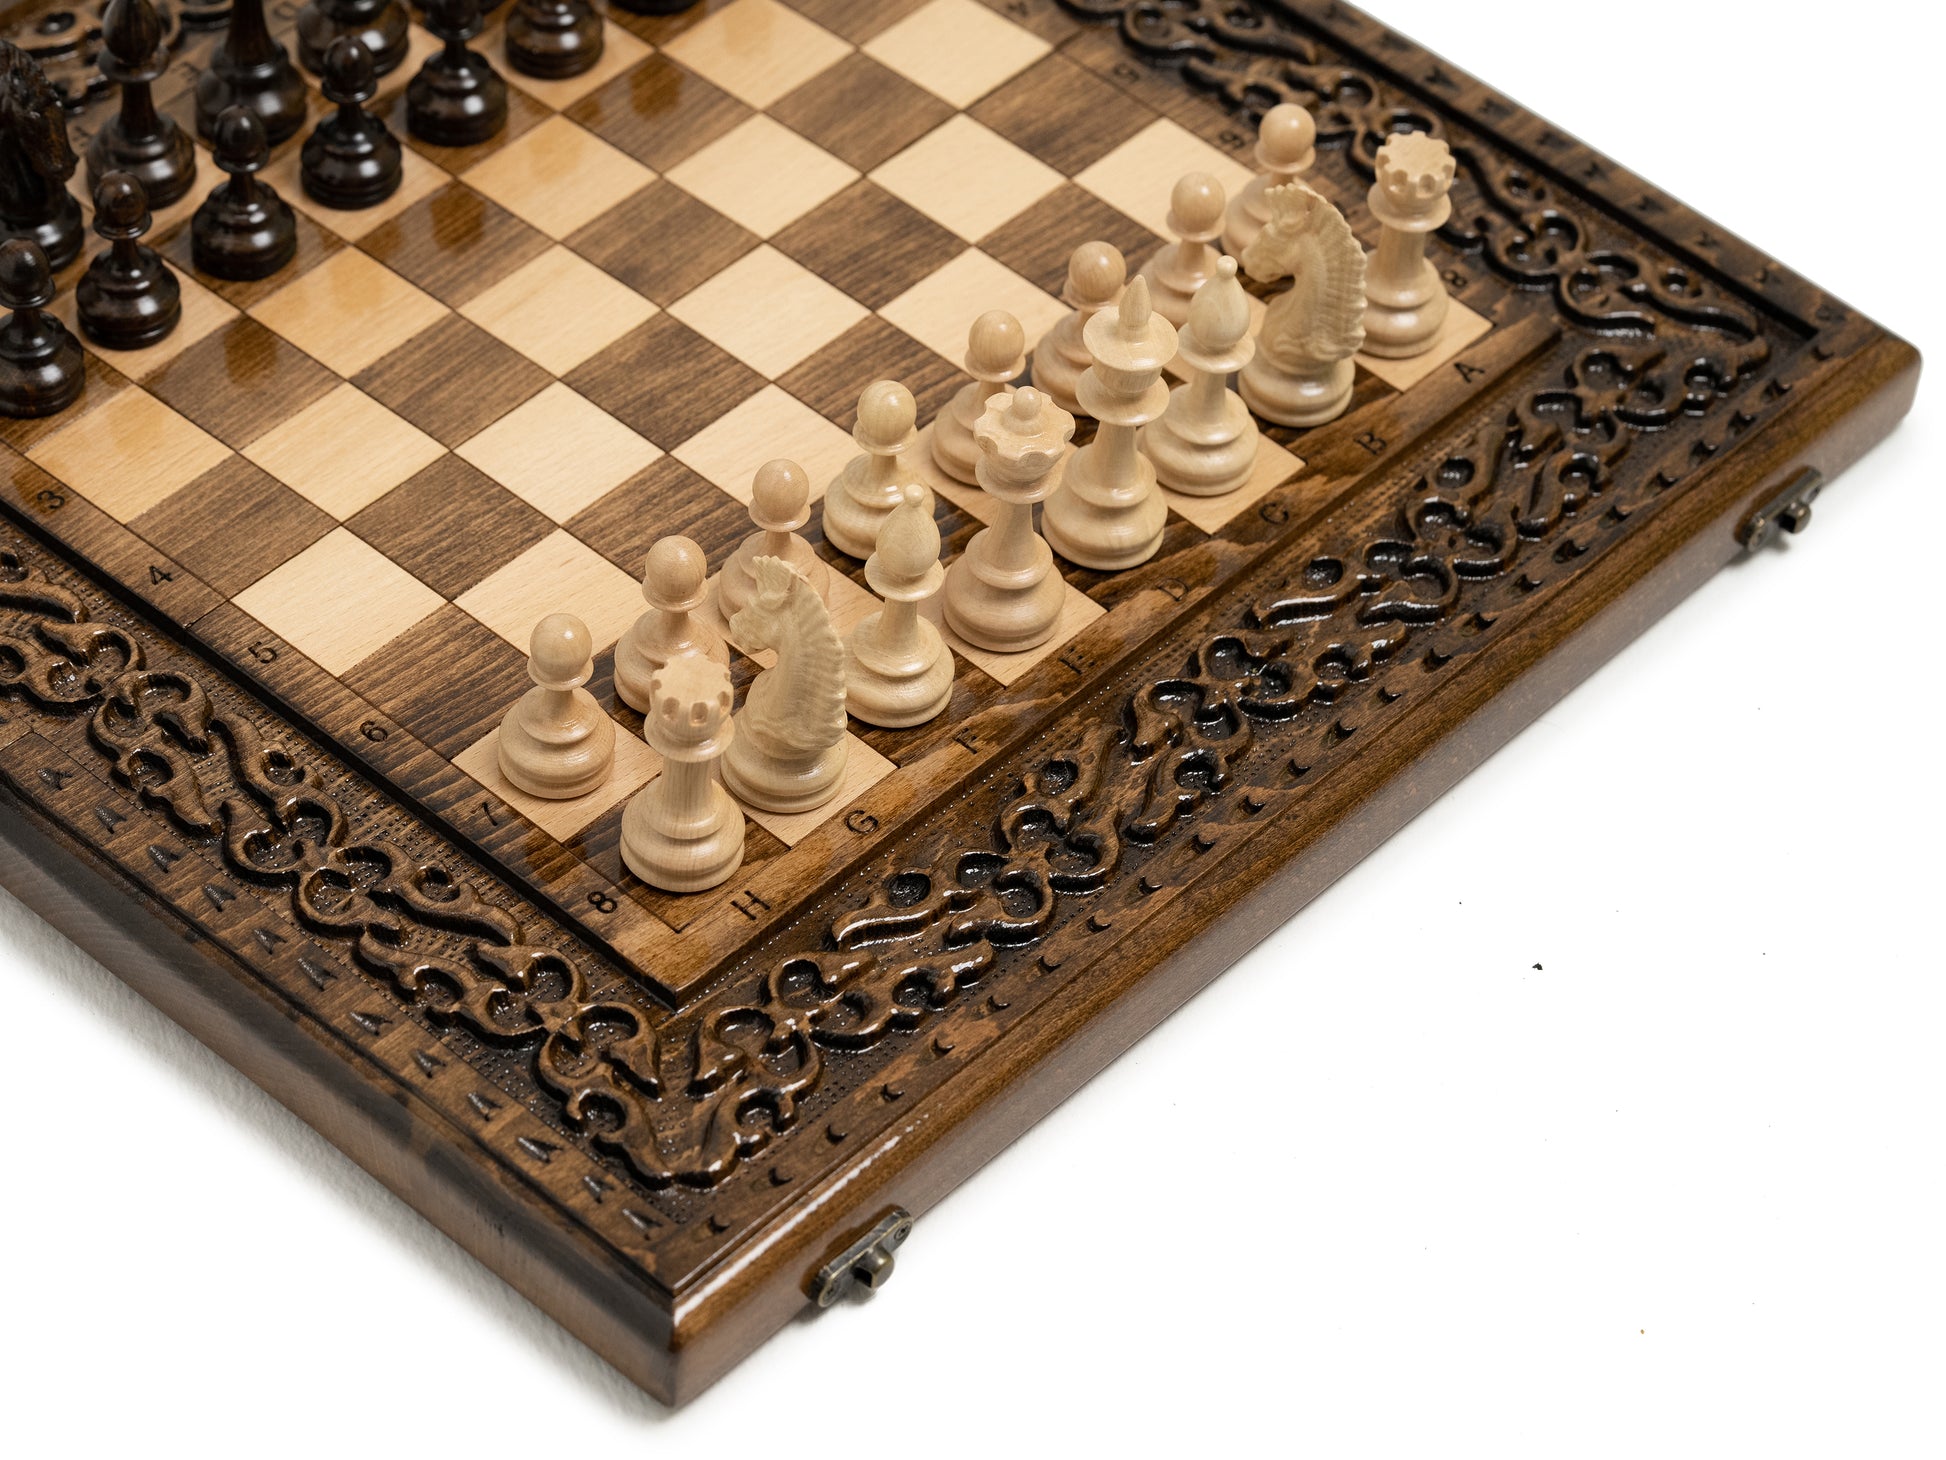 Elegant handmade chess set perfect for game nights